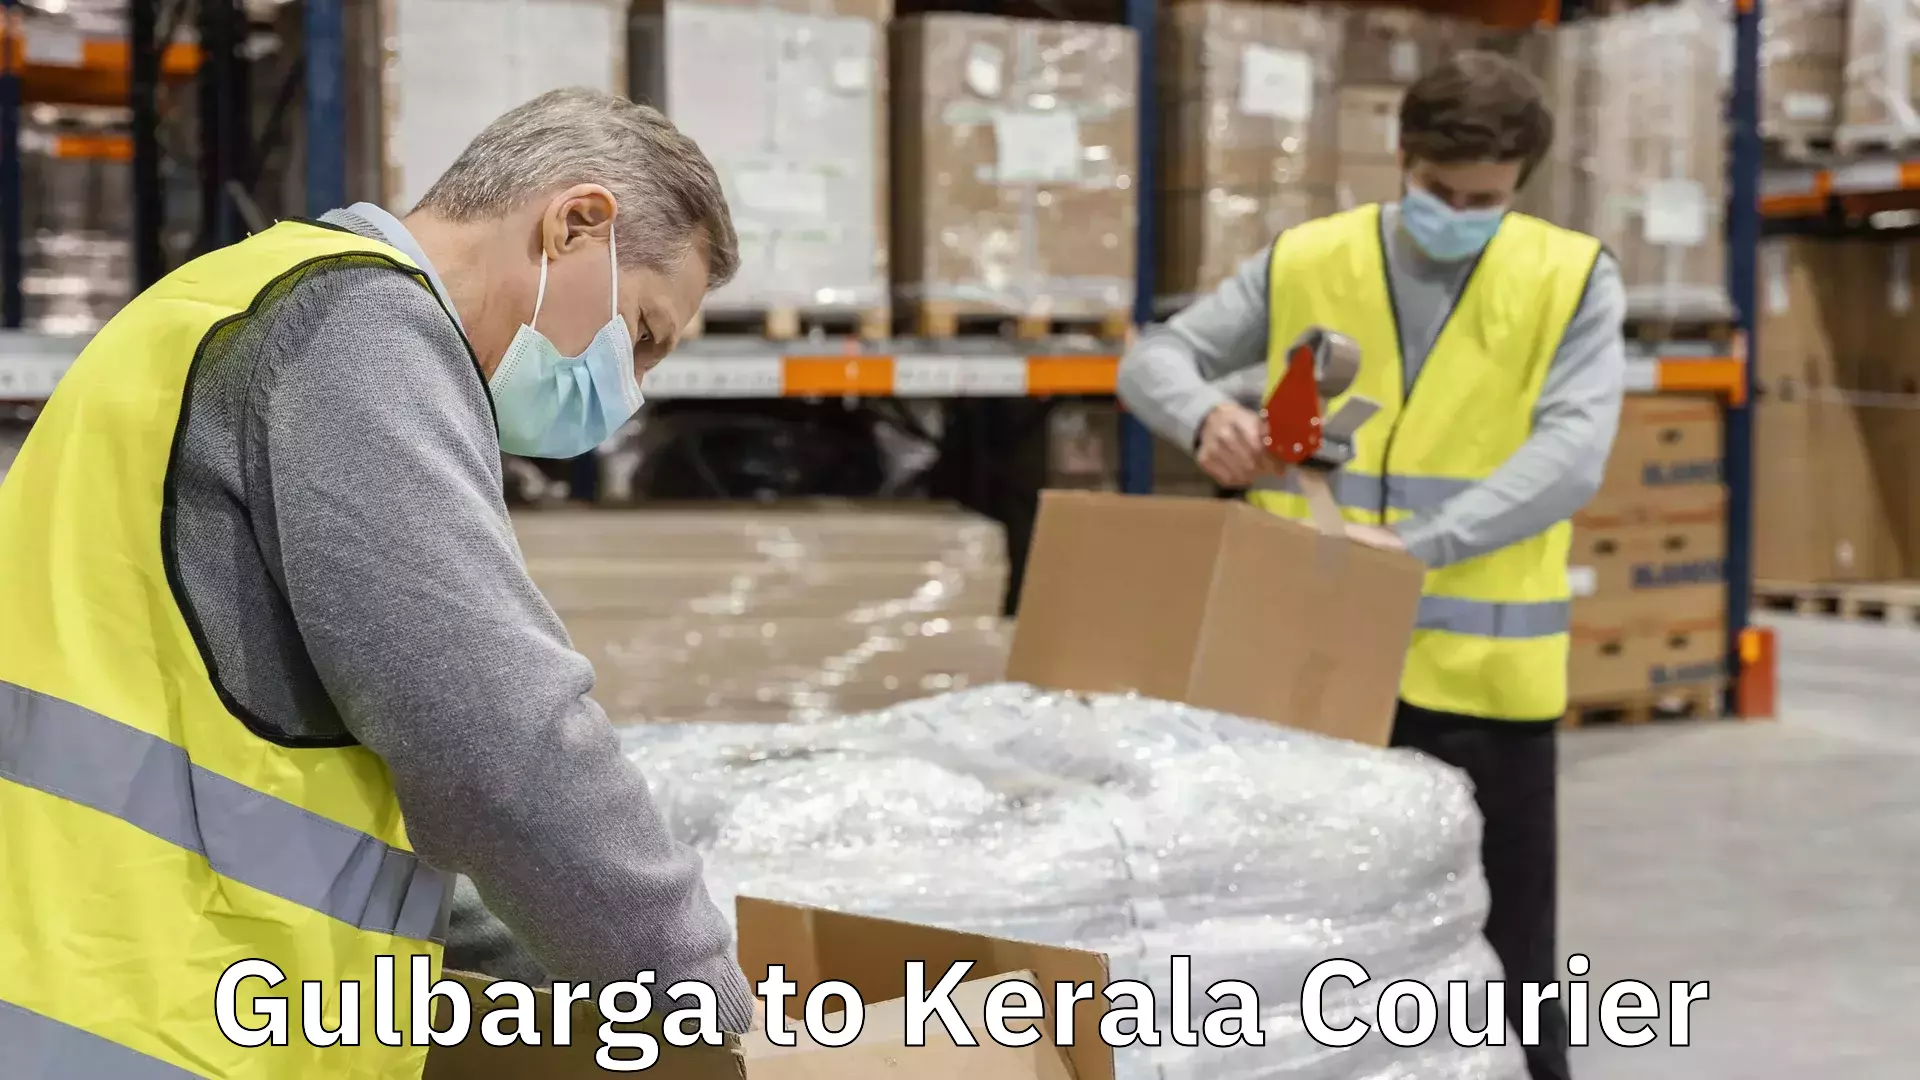 Delivery service partnership Gulbarga to Kerala